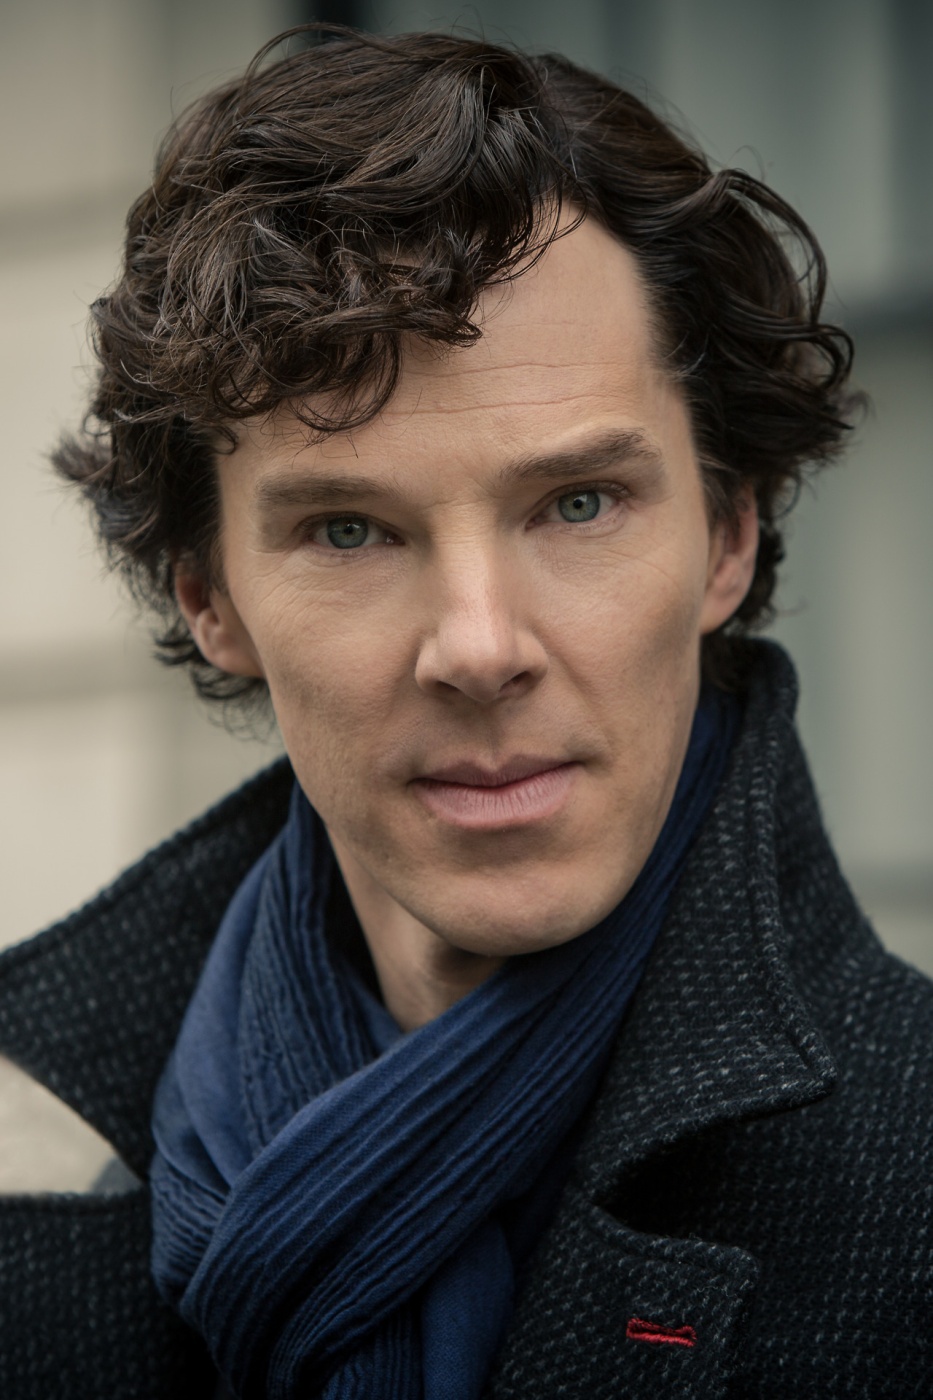 Sherlock-Holmes-Sherlock-BBC1-image-sherlock-holmes-sherlock-bbc1-36725410-1280-1920.jpg